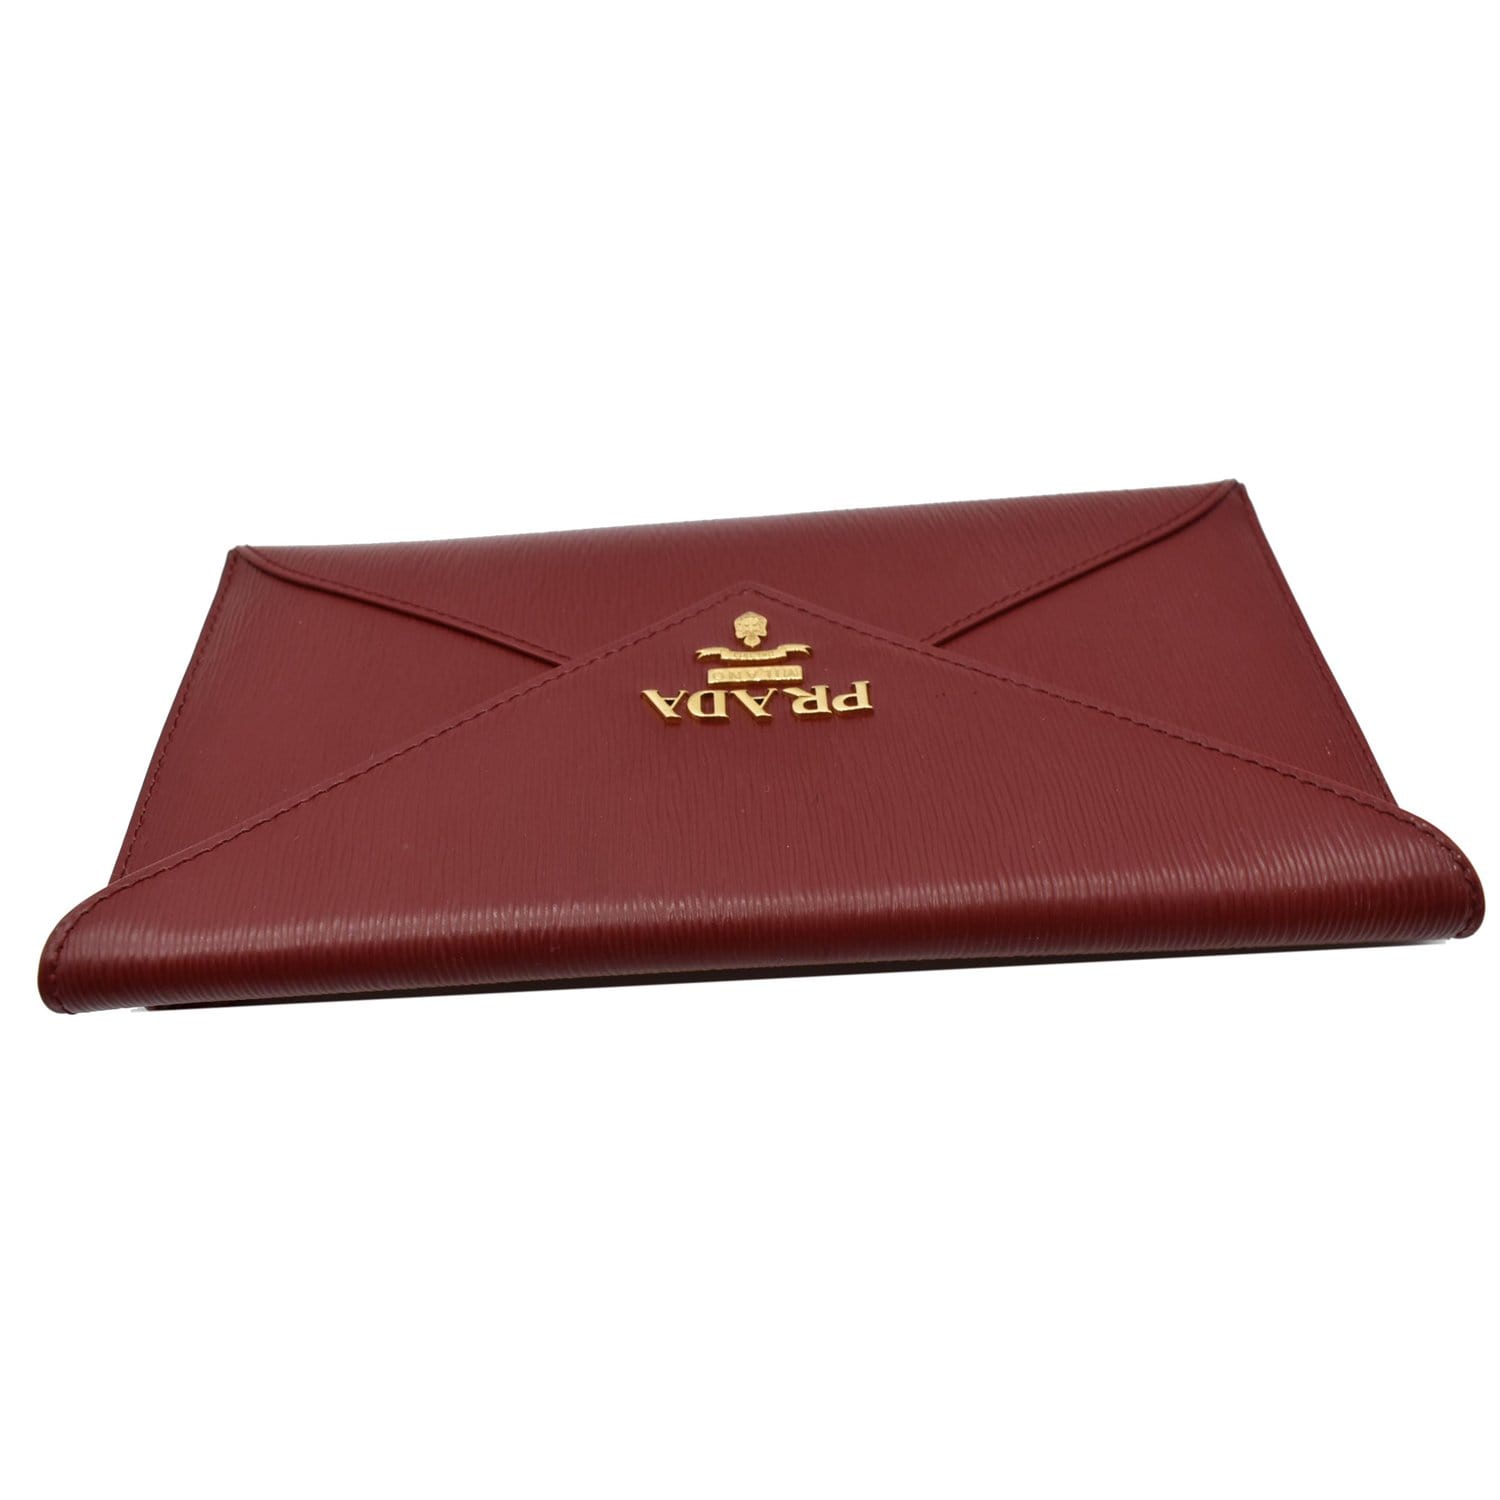 Prada Medium Saffiano Leather Wallet in Red